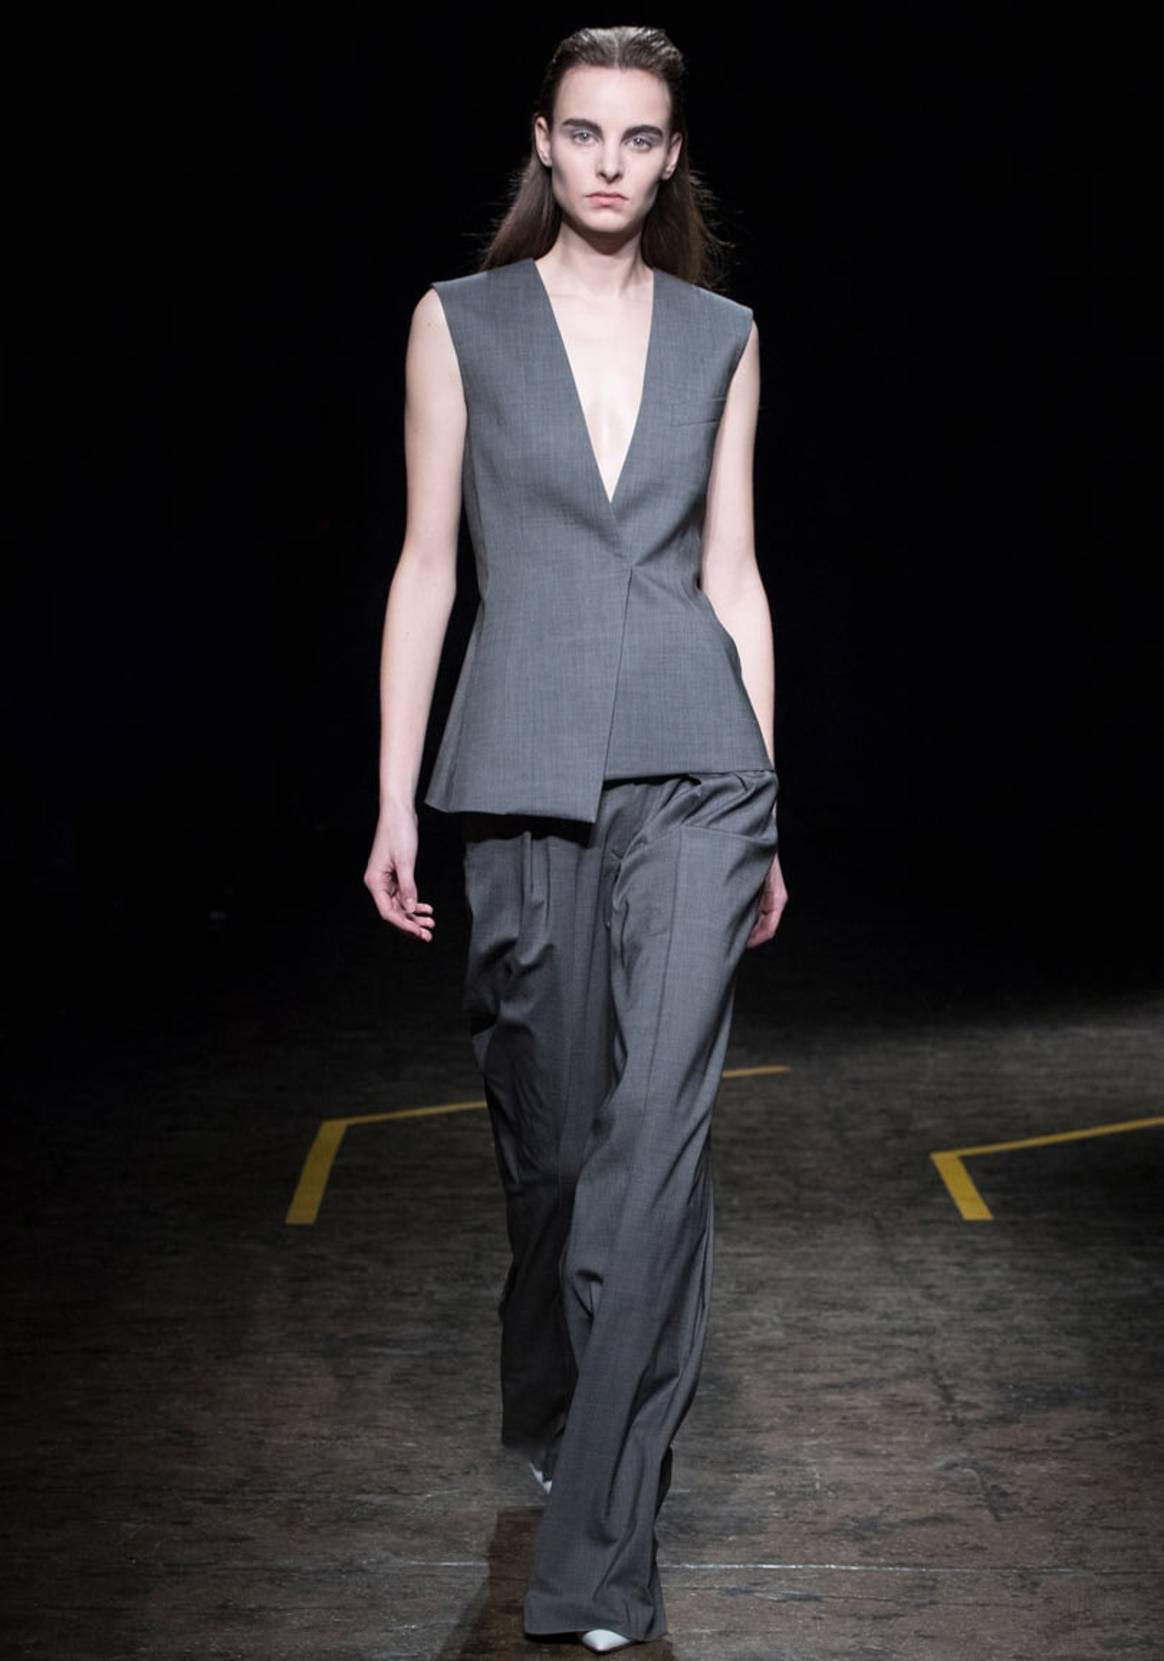 Hugo Boss presents final Jason Wu collection at New York Fashion Week